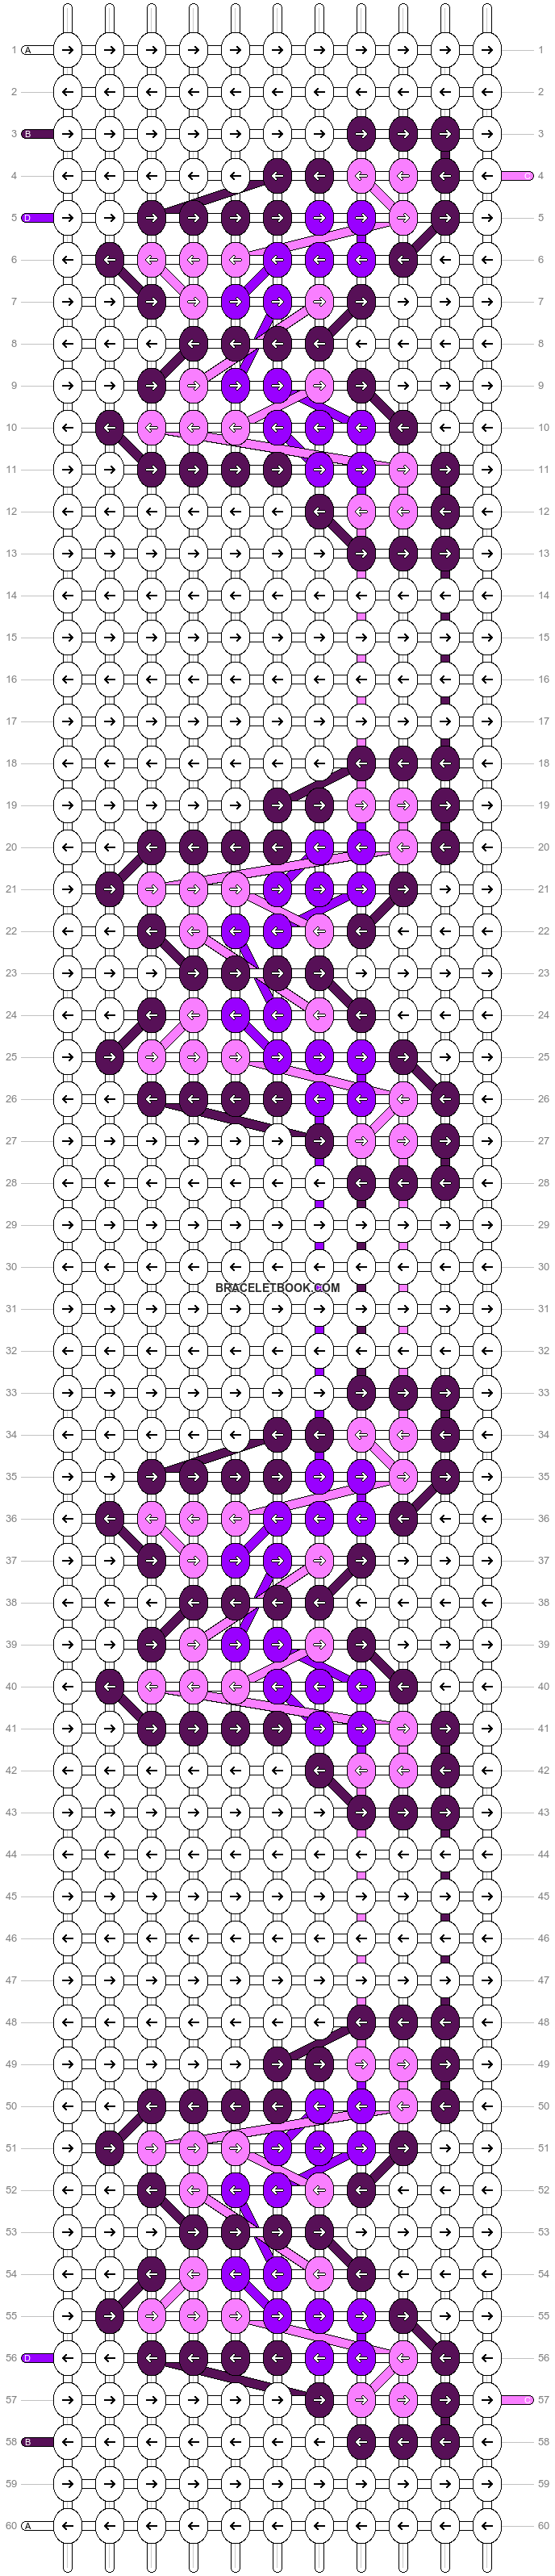 Alpha pattern #34447 variation #28539 pattern